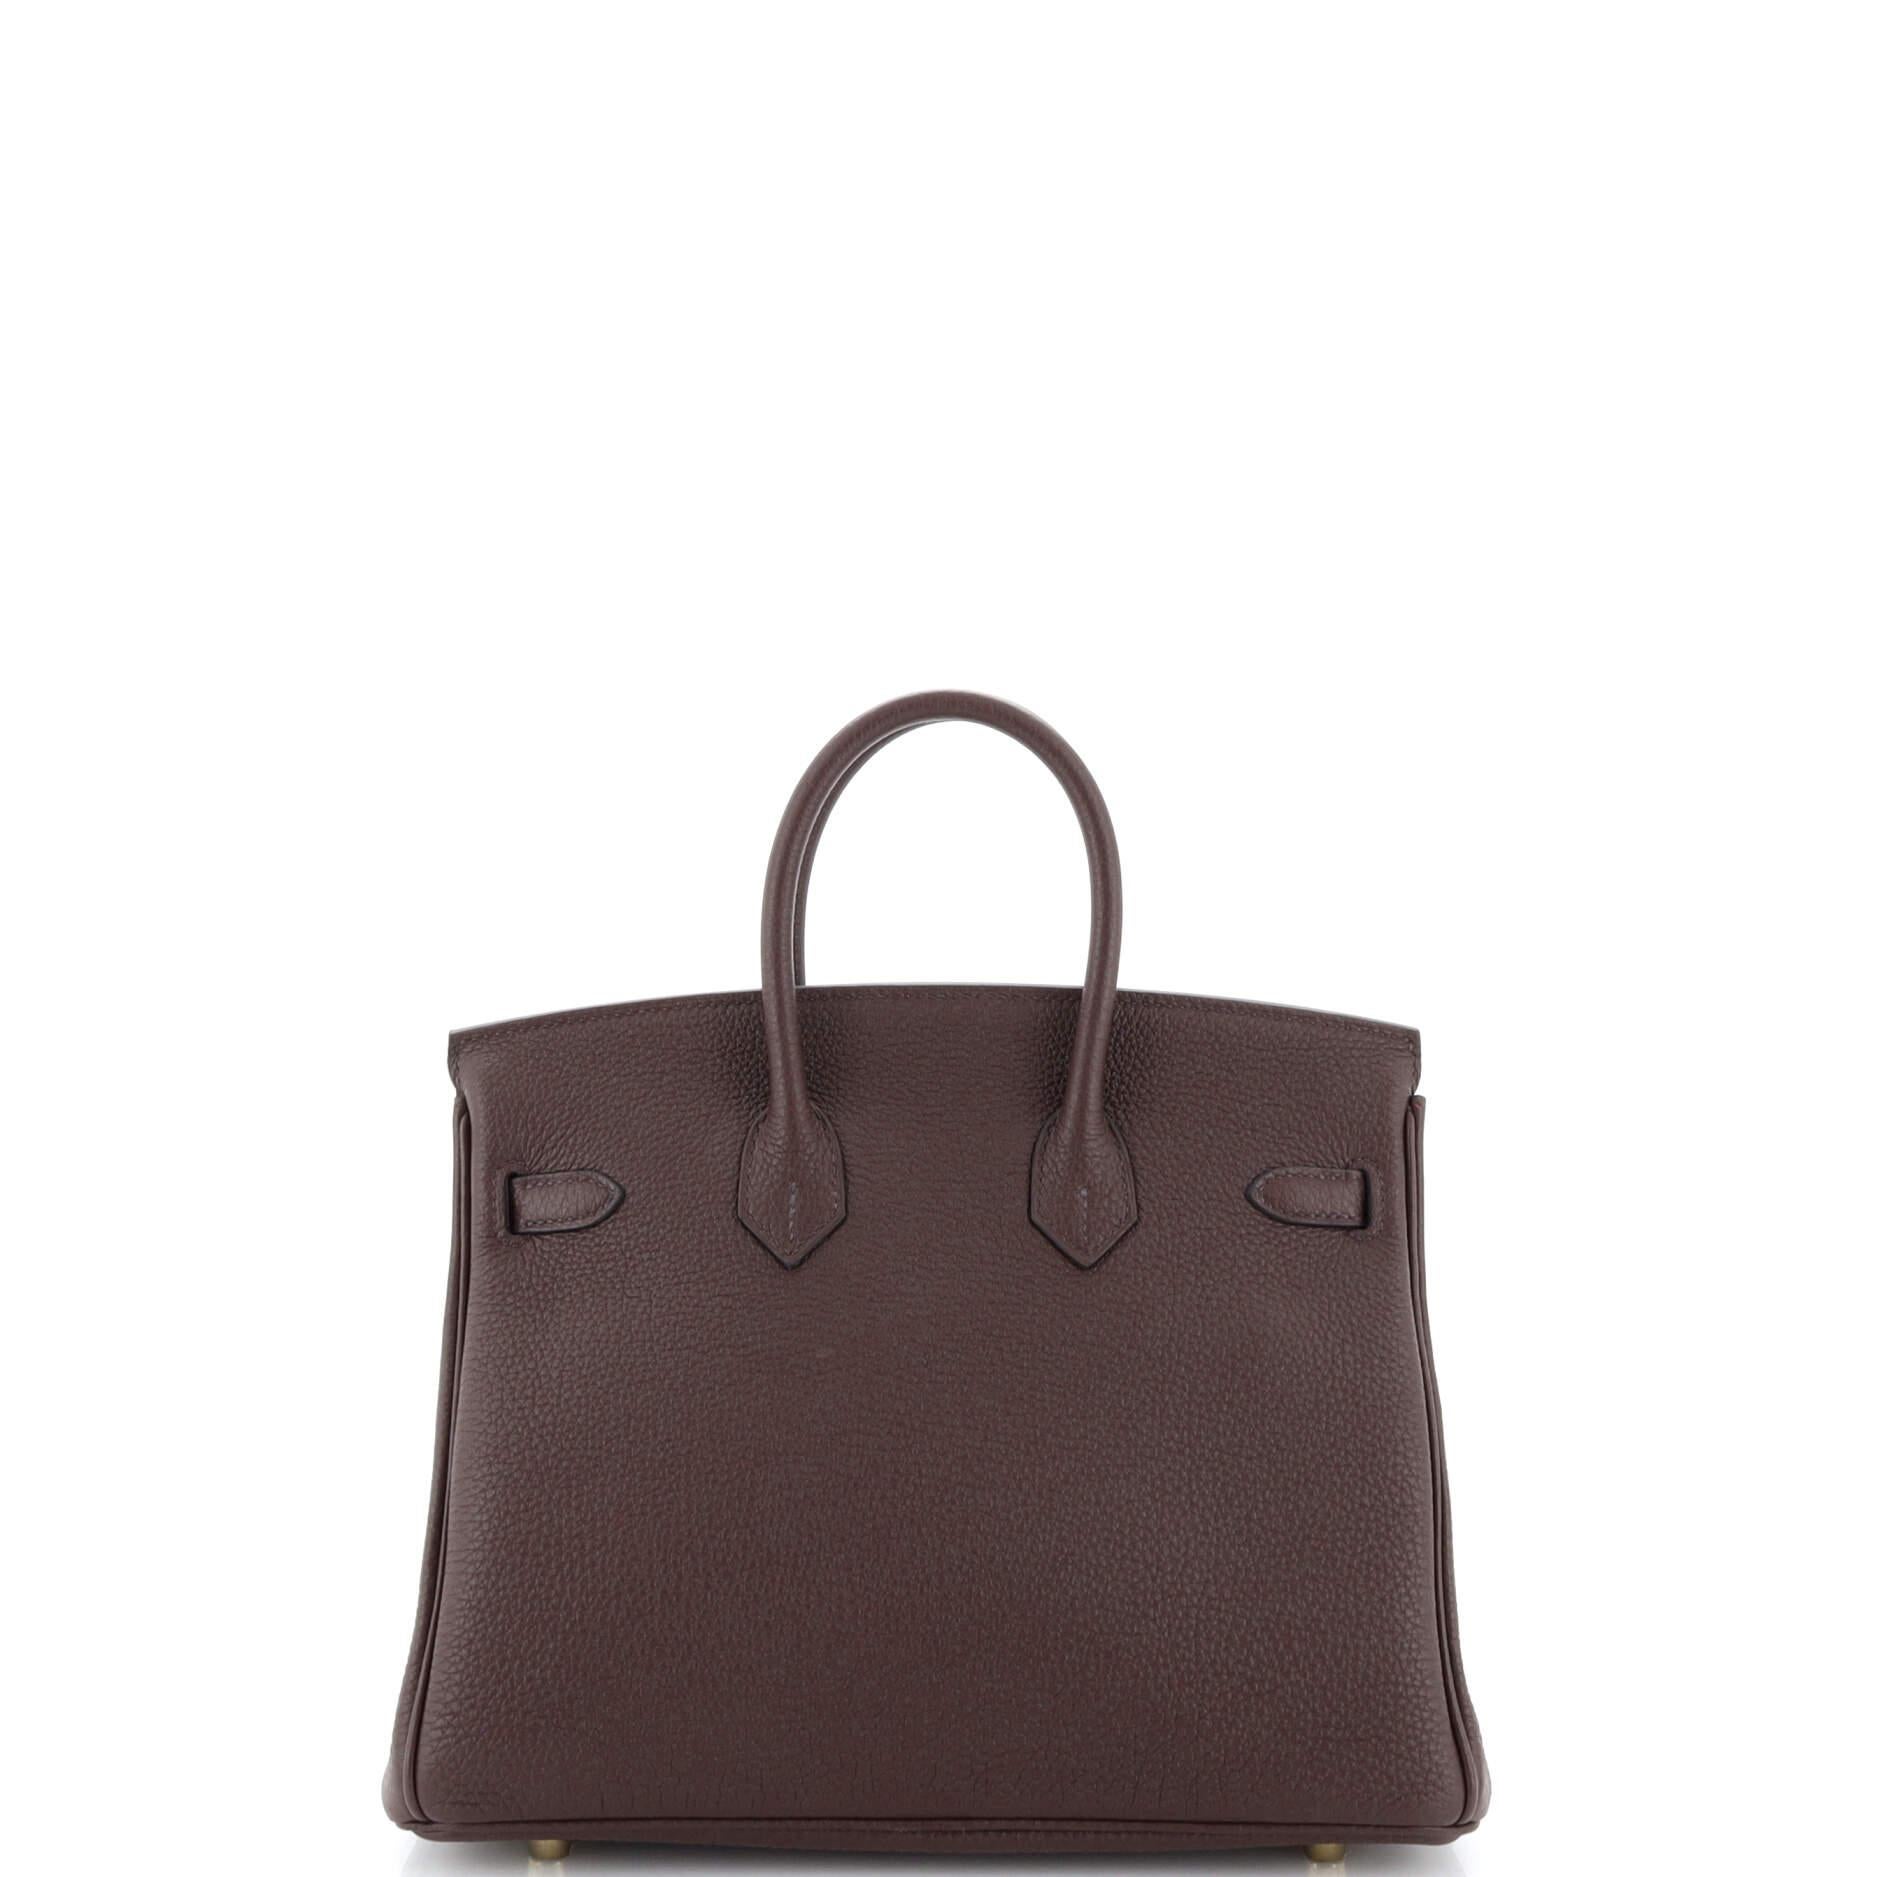 Women's or Men's Hermes Birkin Handbag Rouge Sellier Togo with Gold Hardware 25